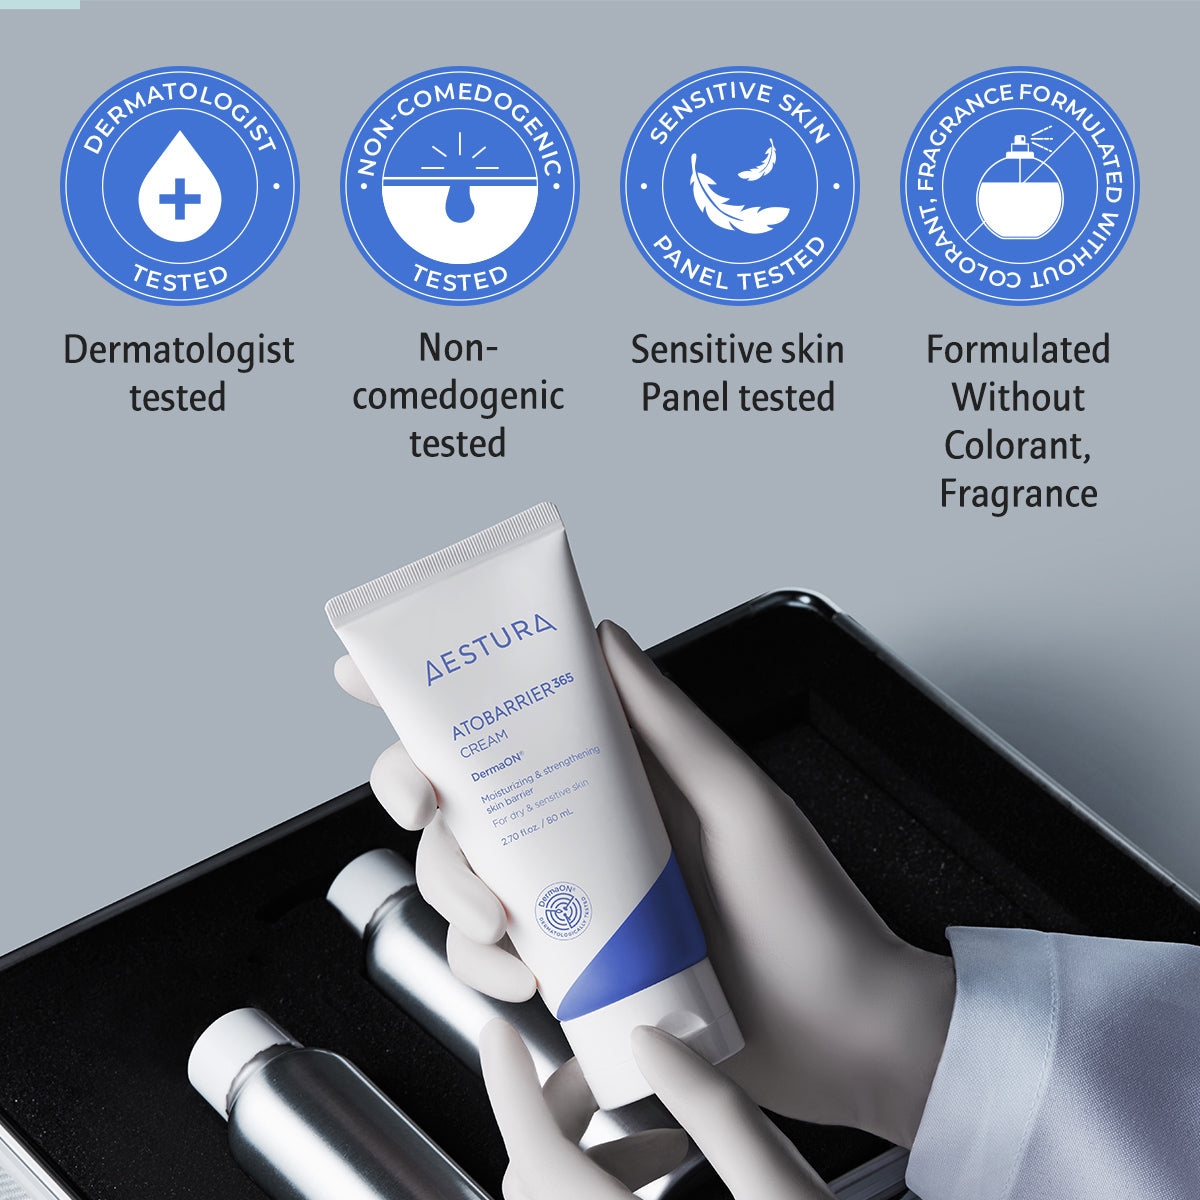 [2024 Renewal] AESTURA Atobarrier 365 Cream 80ml, Cream with Ceramide, Korean Skin Care, Skin Barrier Repair, 120 hours Lasting Hydration for Dry & Sensitive Skin, Rich Moisturizer